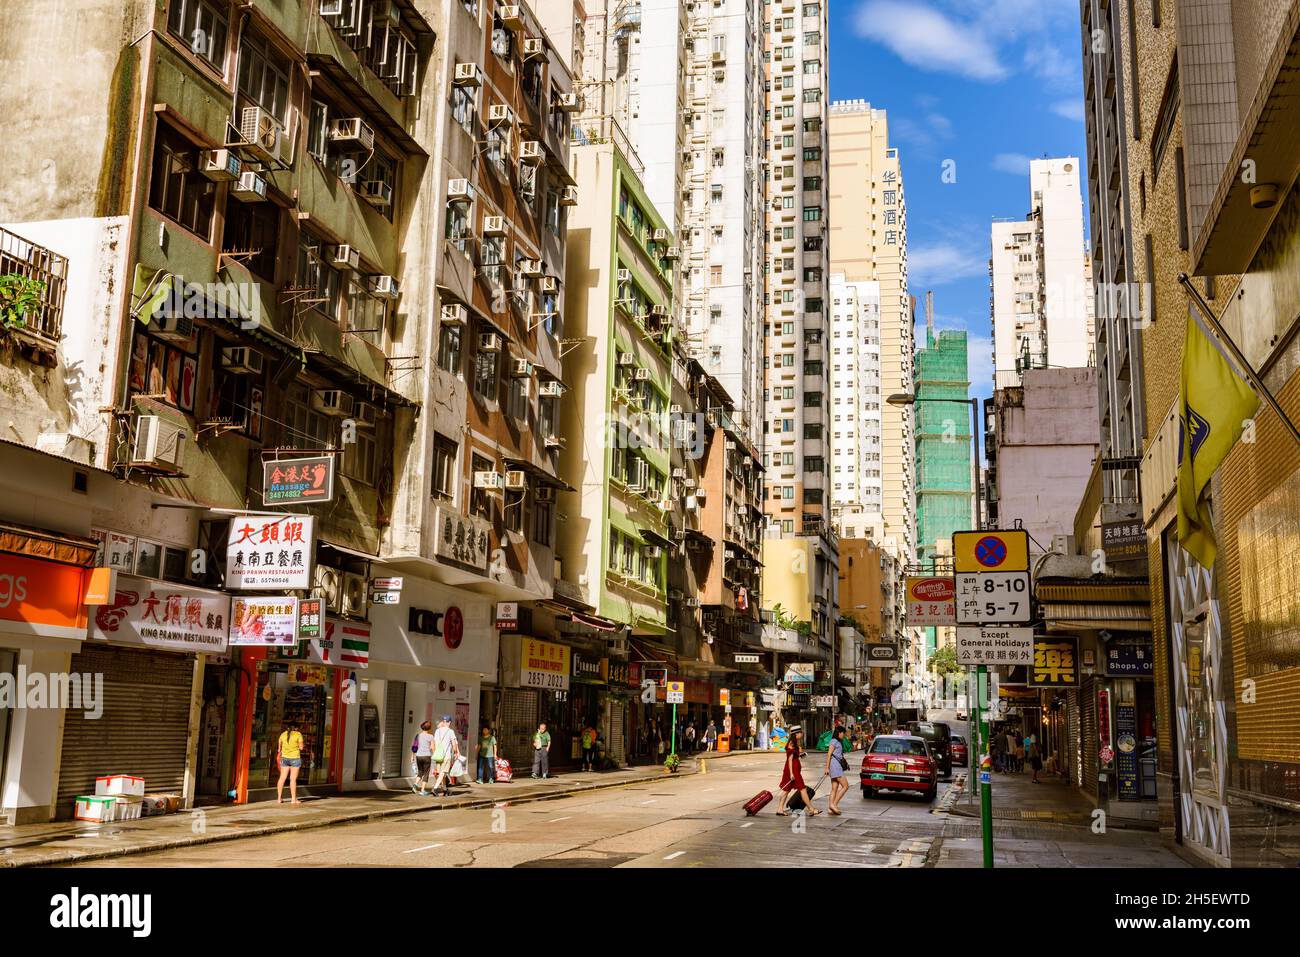 Hong Kong, China - 05 May 2018: Historical street of rundown old apartments in Sai Ying Pun area. Stock Photo